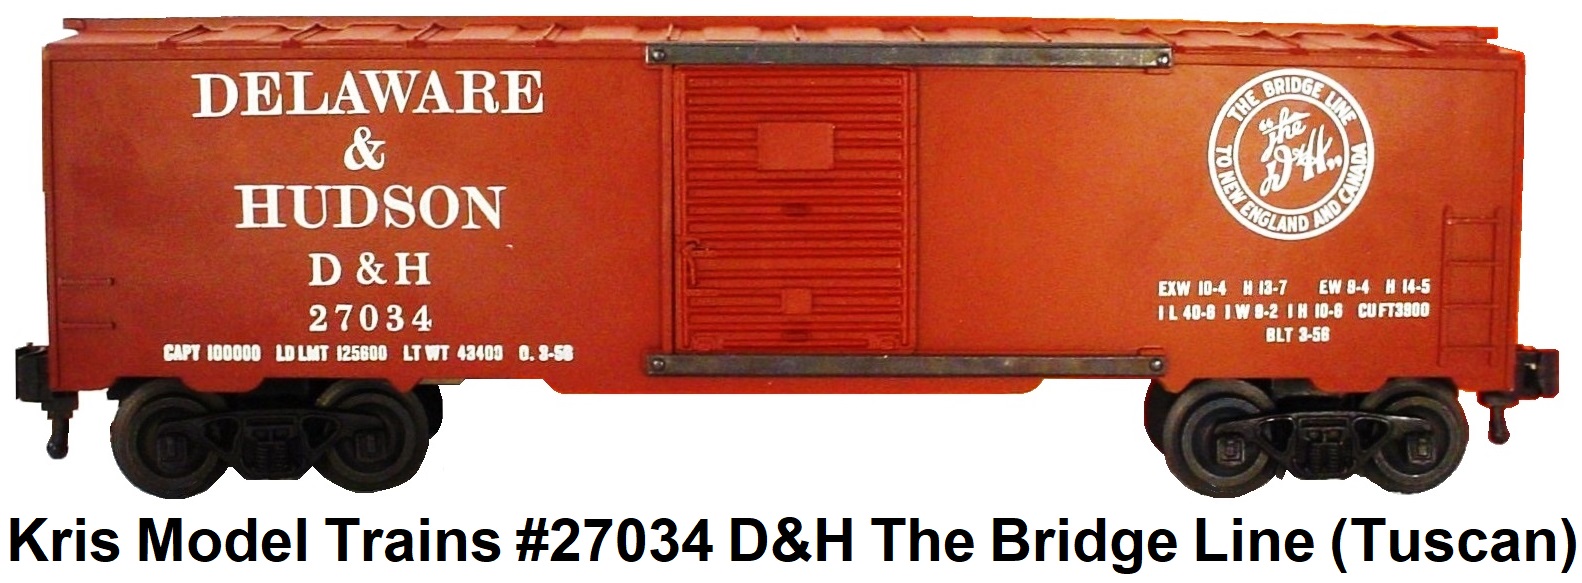 Kris Model Trains Delaware & Hudson Boxcar 'The Bridge Line' #27034 in Tuscan